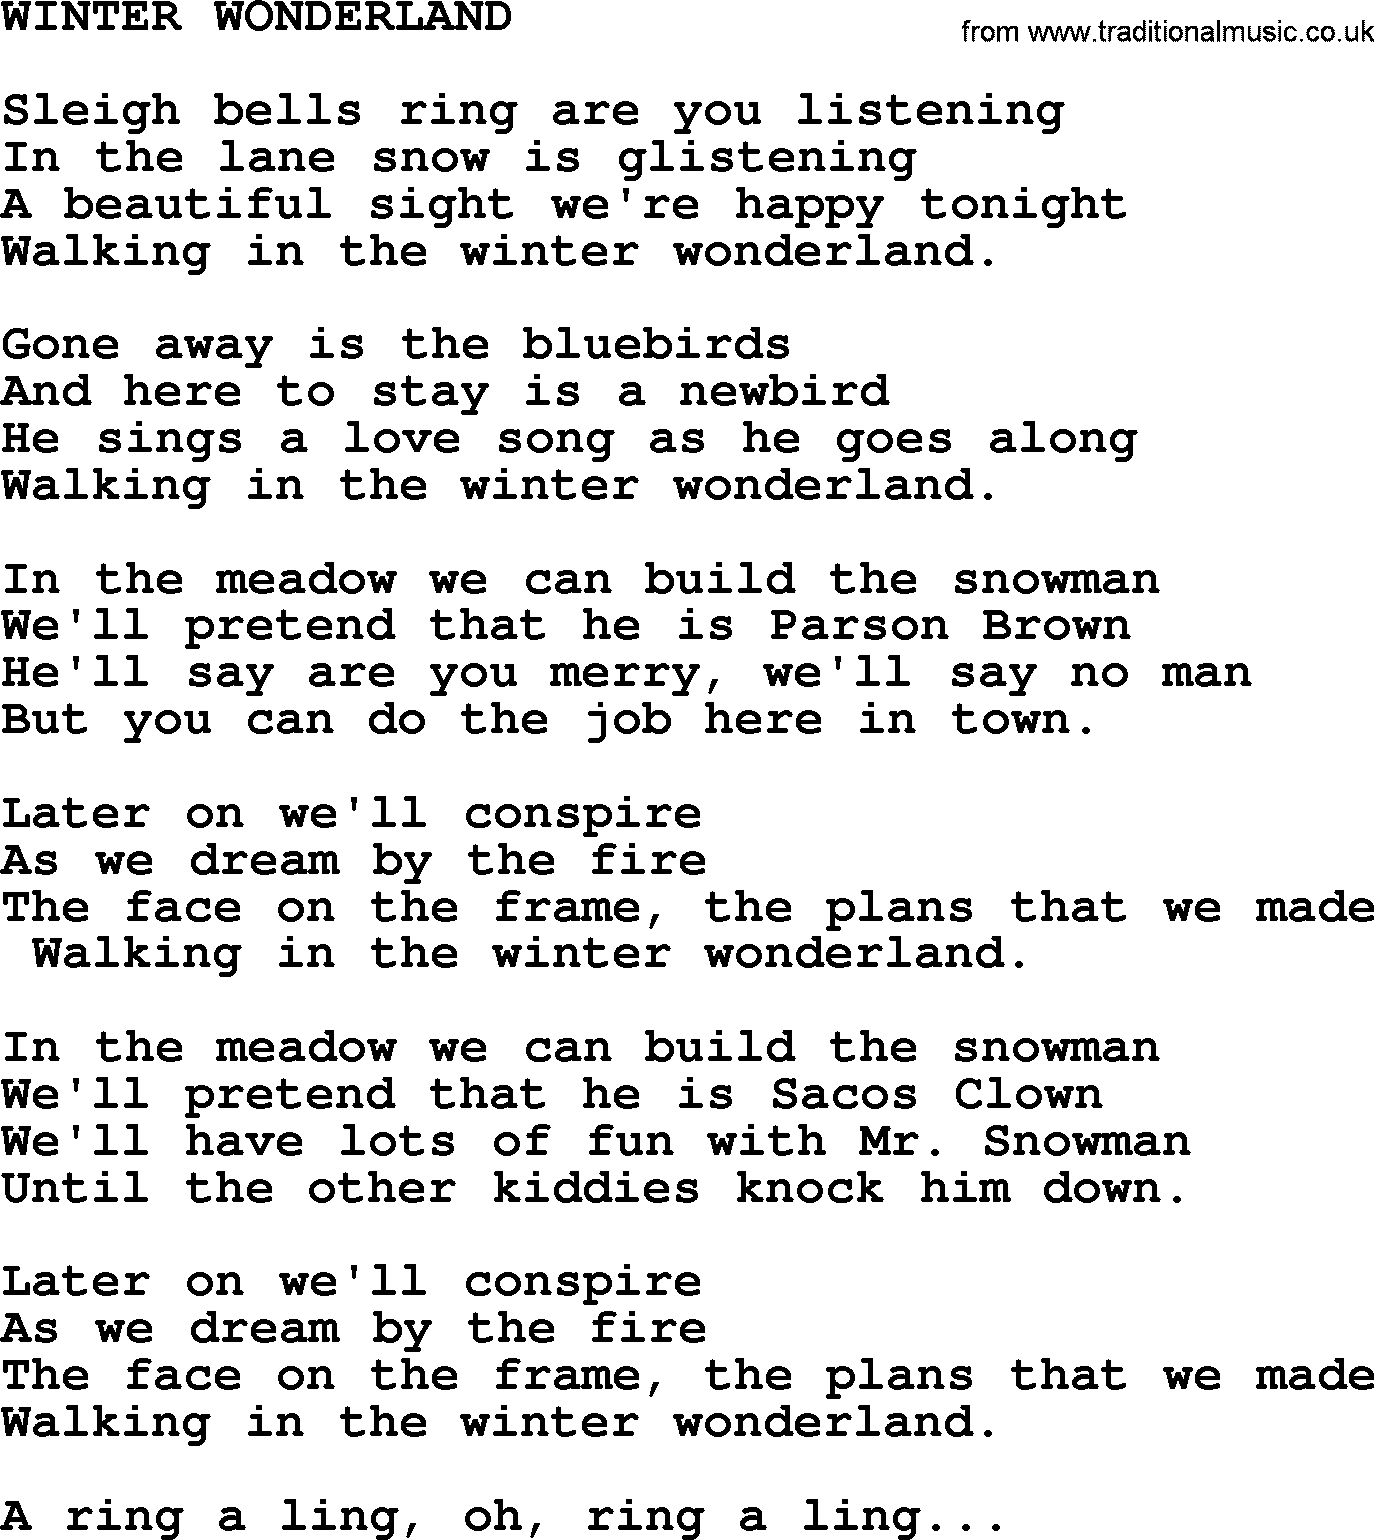 Merle Haggard song: Winter Wonderland, lyrics.